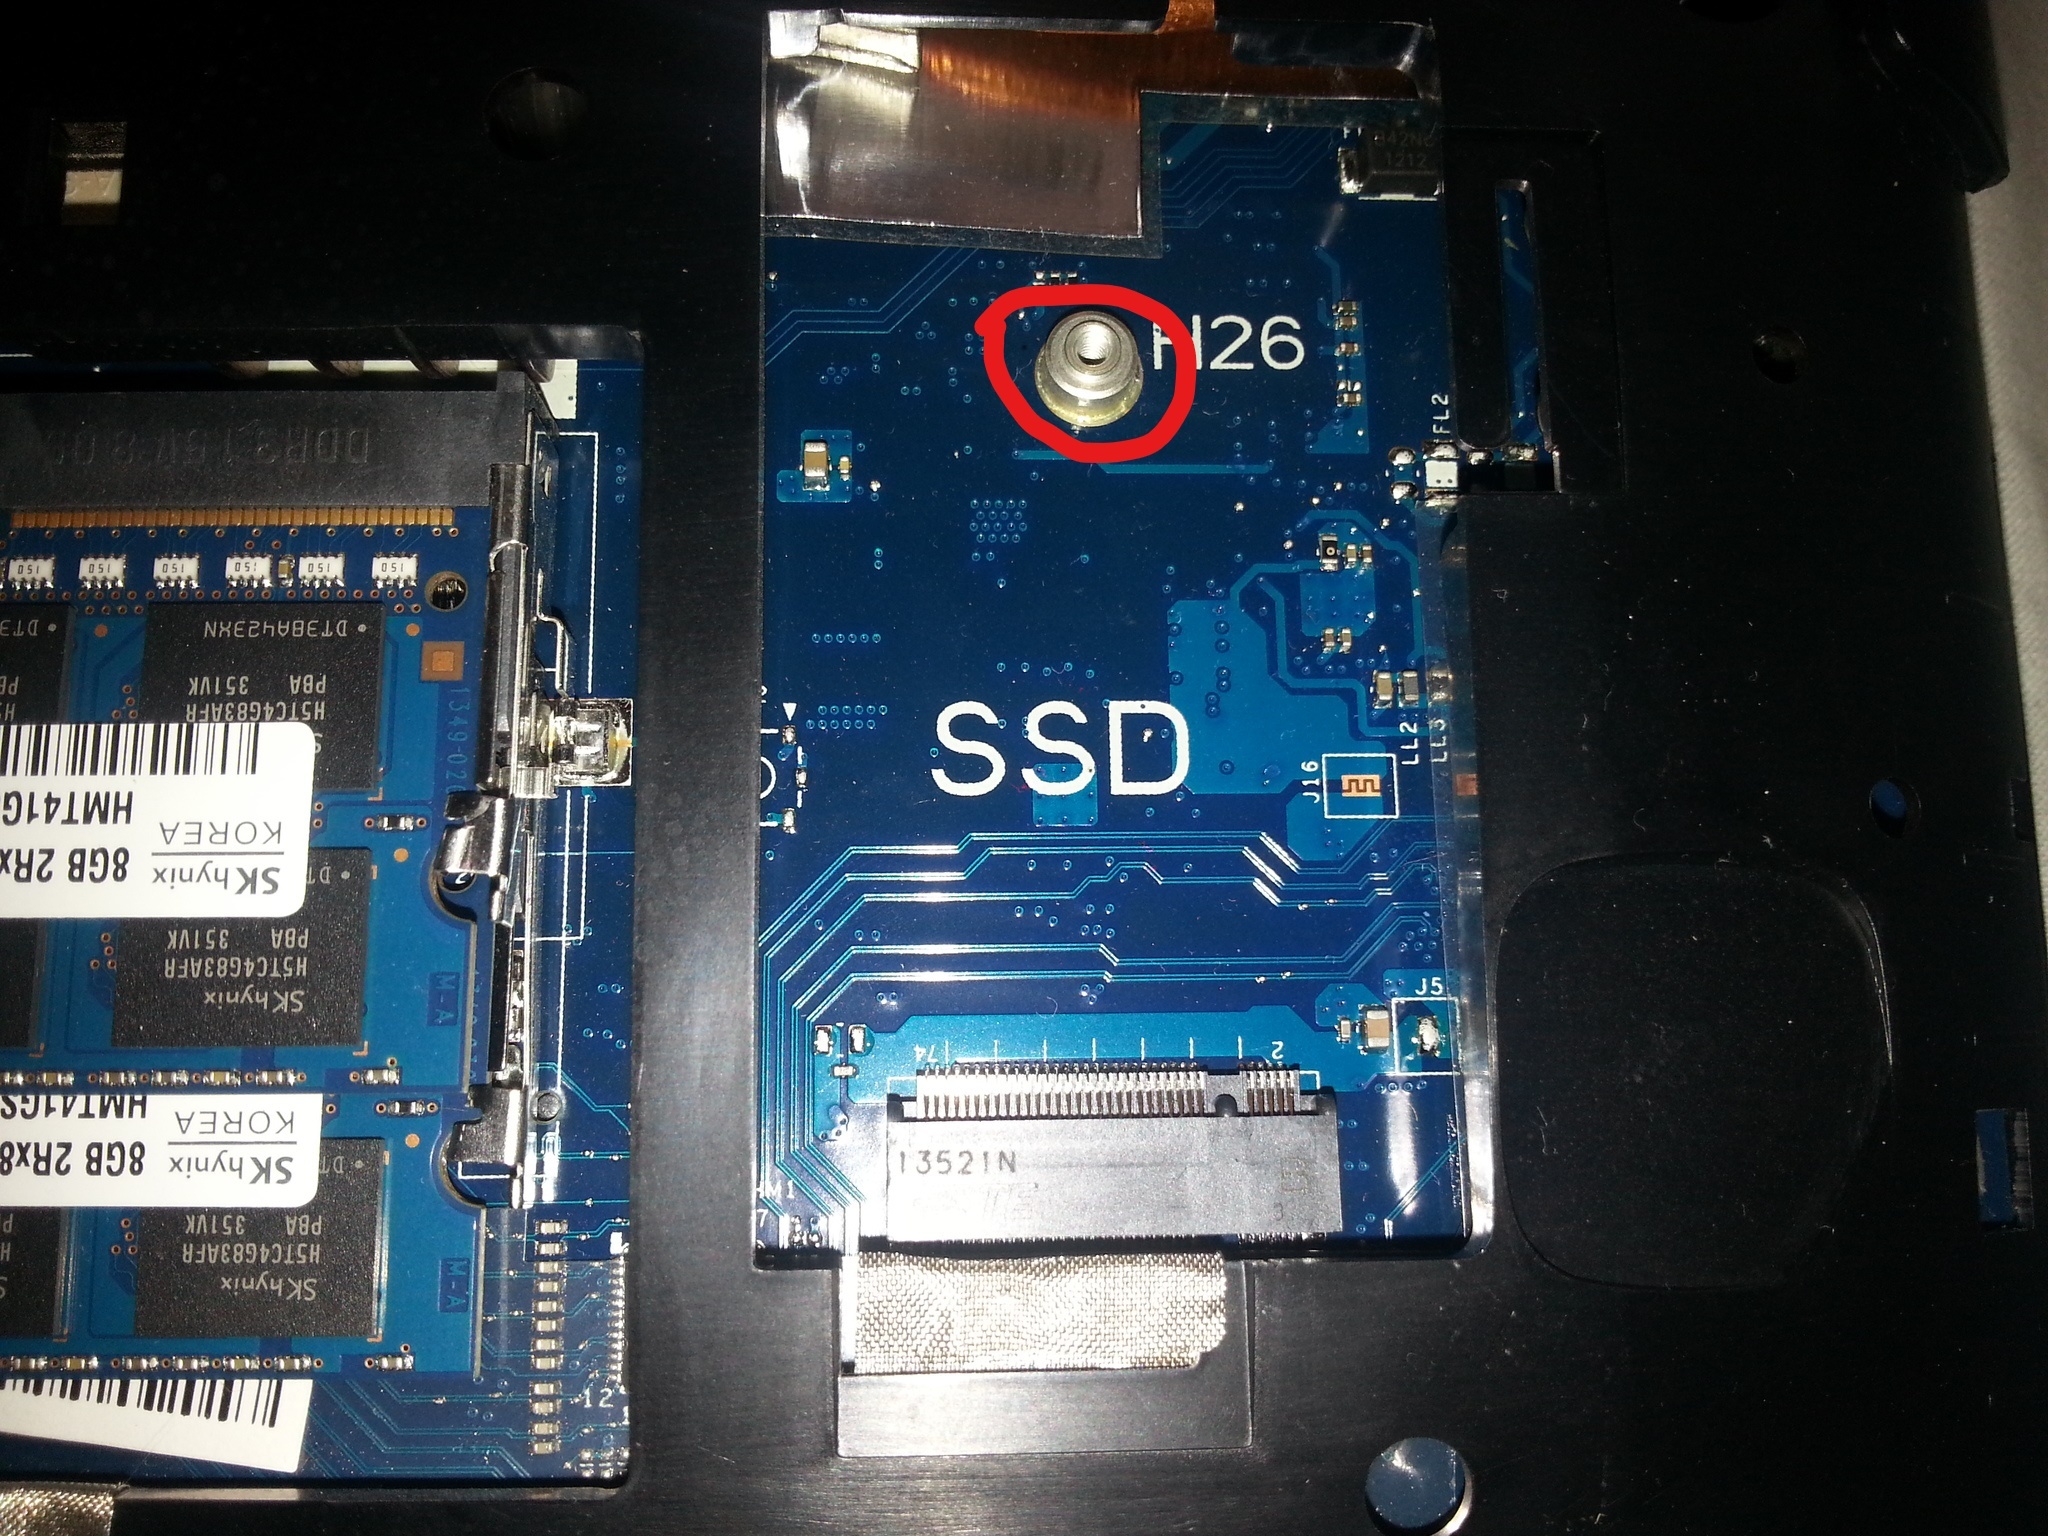 Y510P-M-2-SSD-SLOT-SCREW-TYPE - English Community - LENOVO COMMUNITY